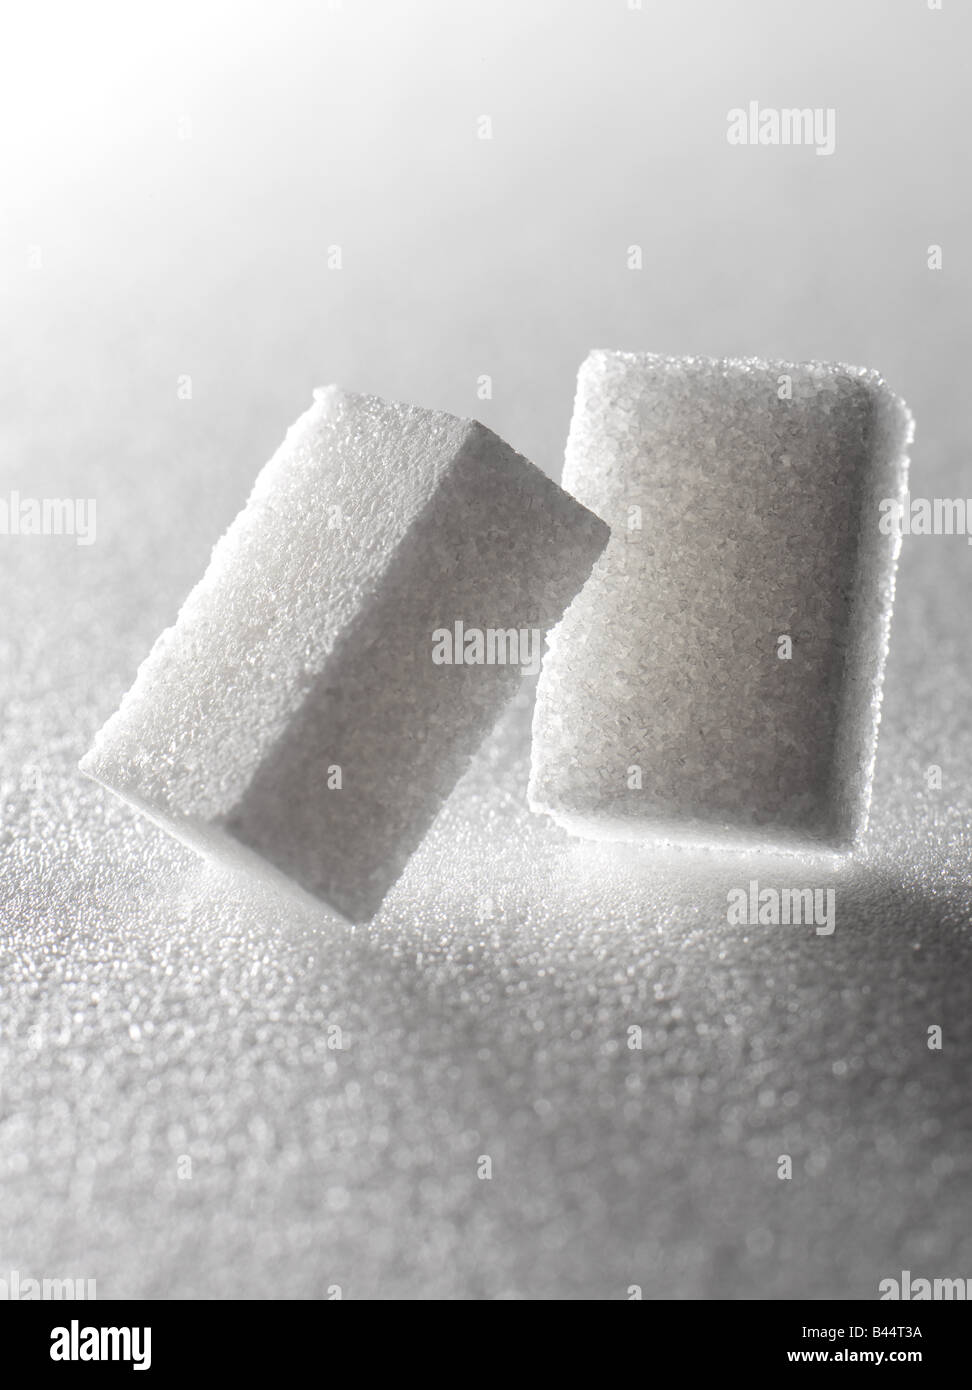 Two sugar lumps Stock Photo - Alamy